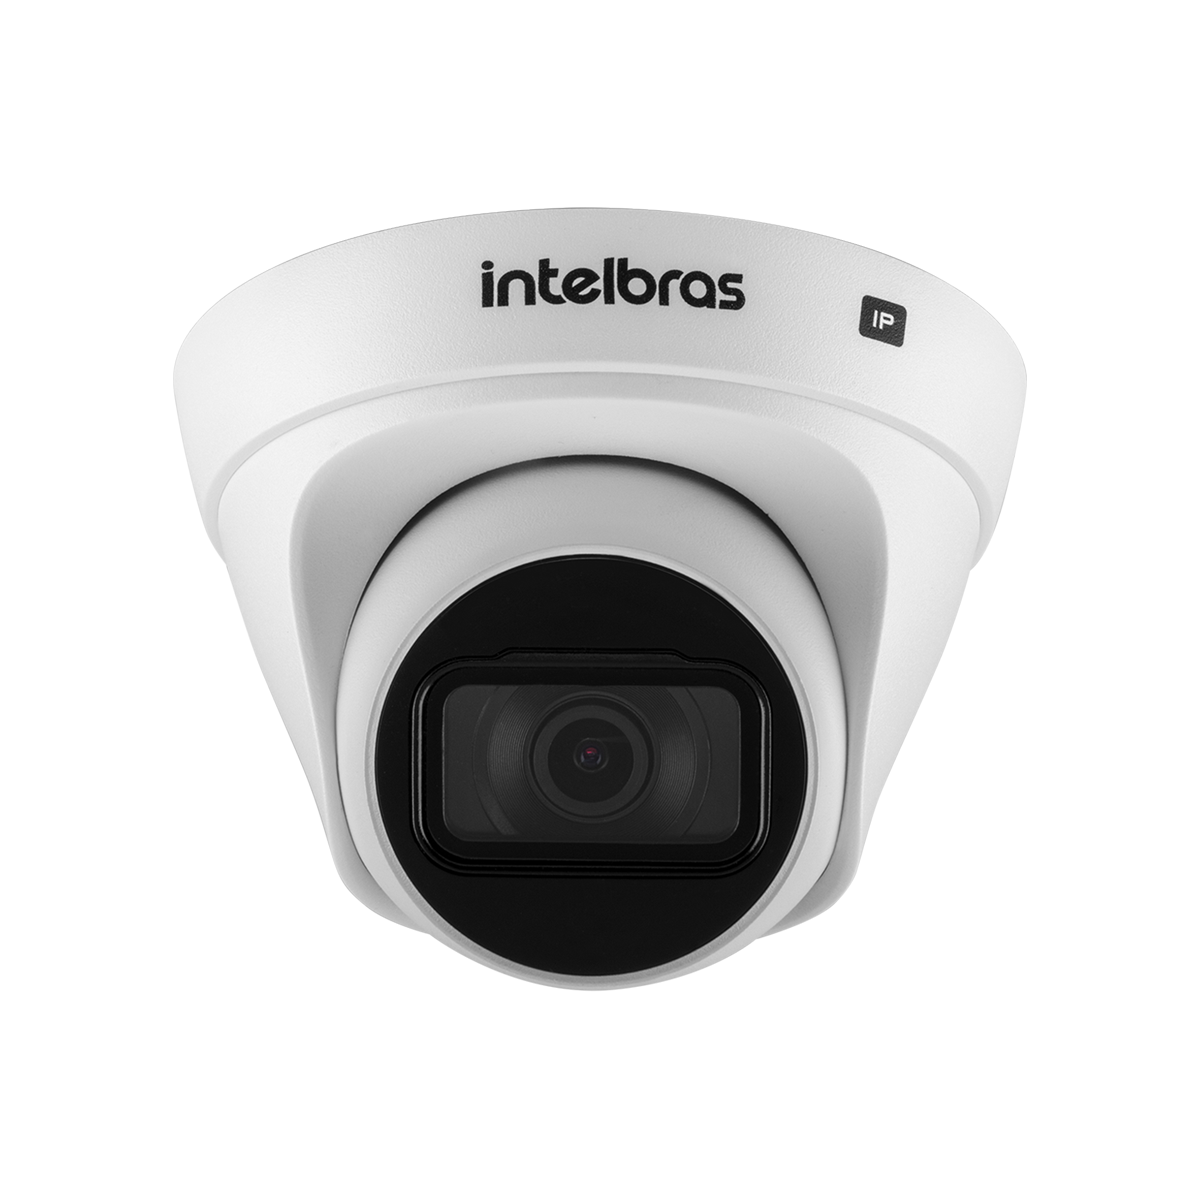 Yup hatred Line of sight IP Cameras | Intelbras